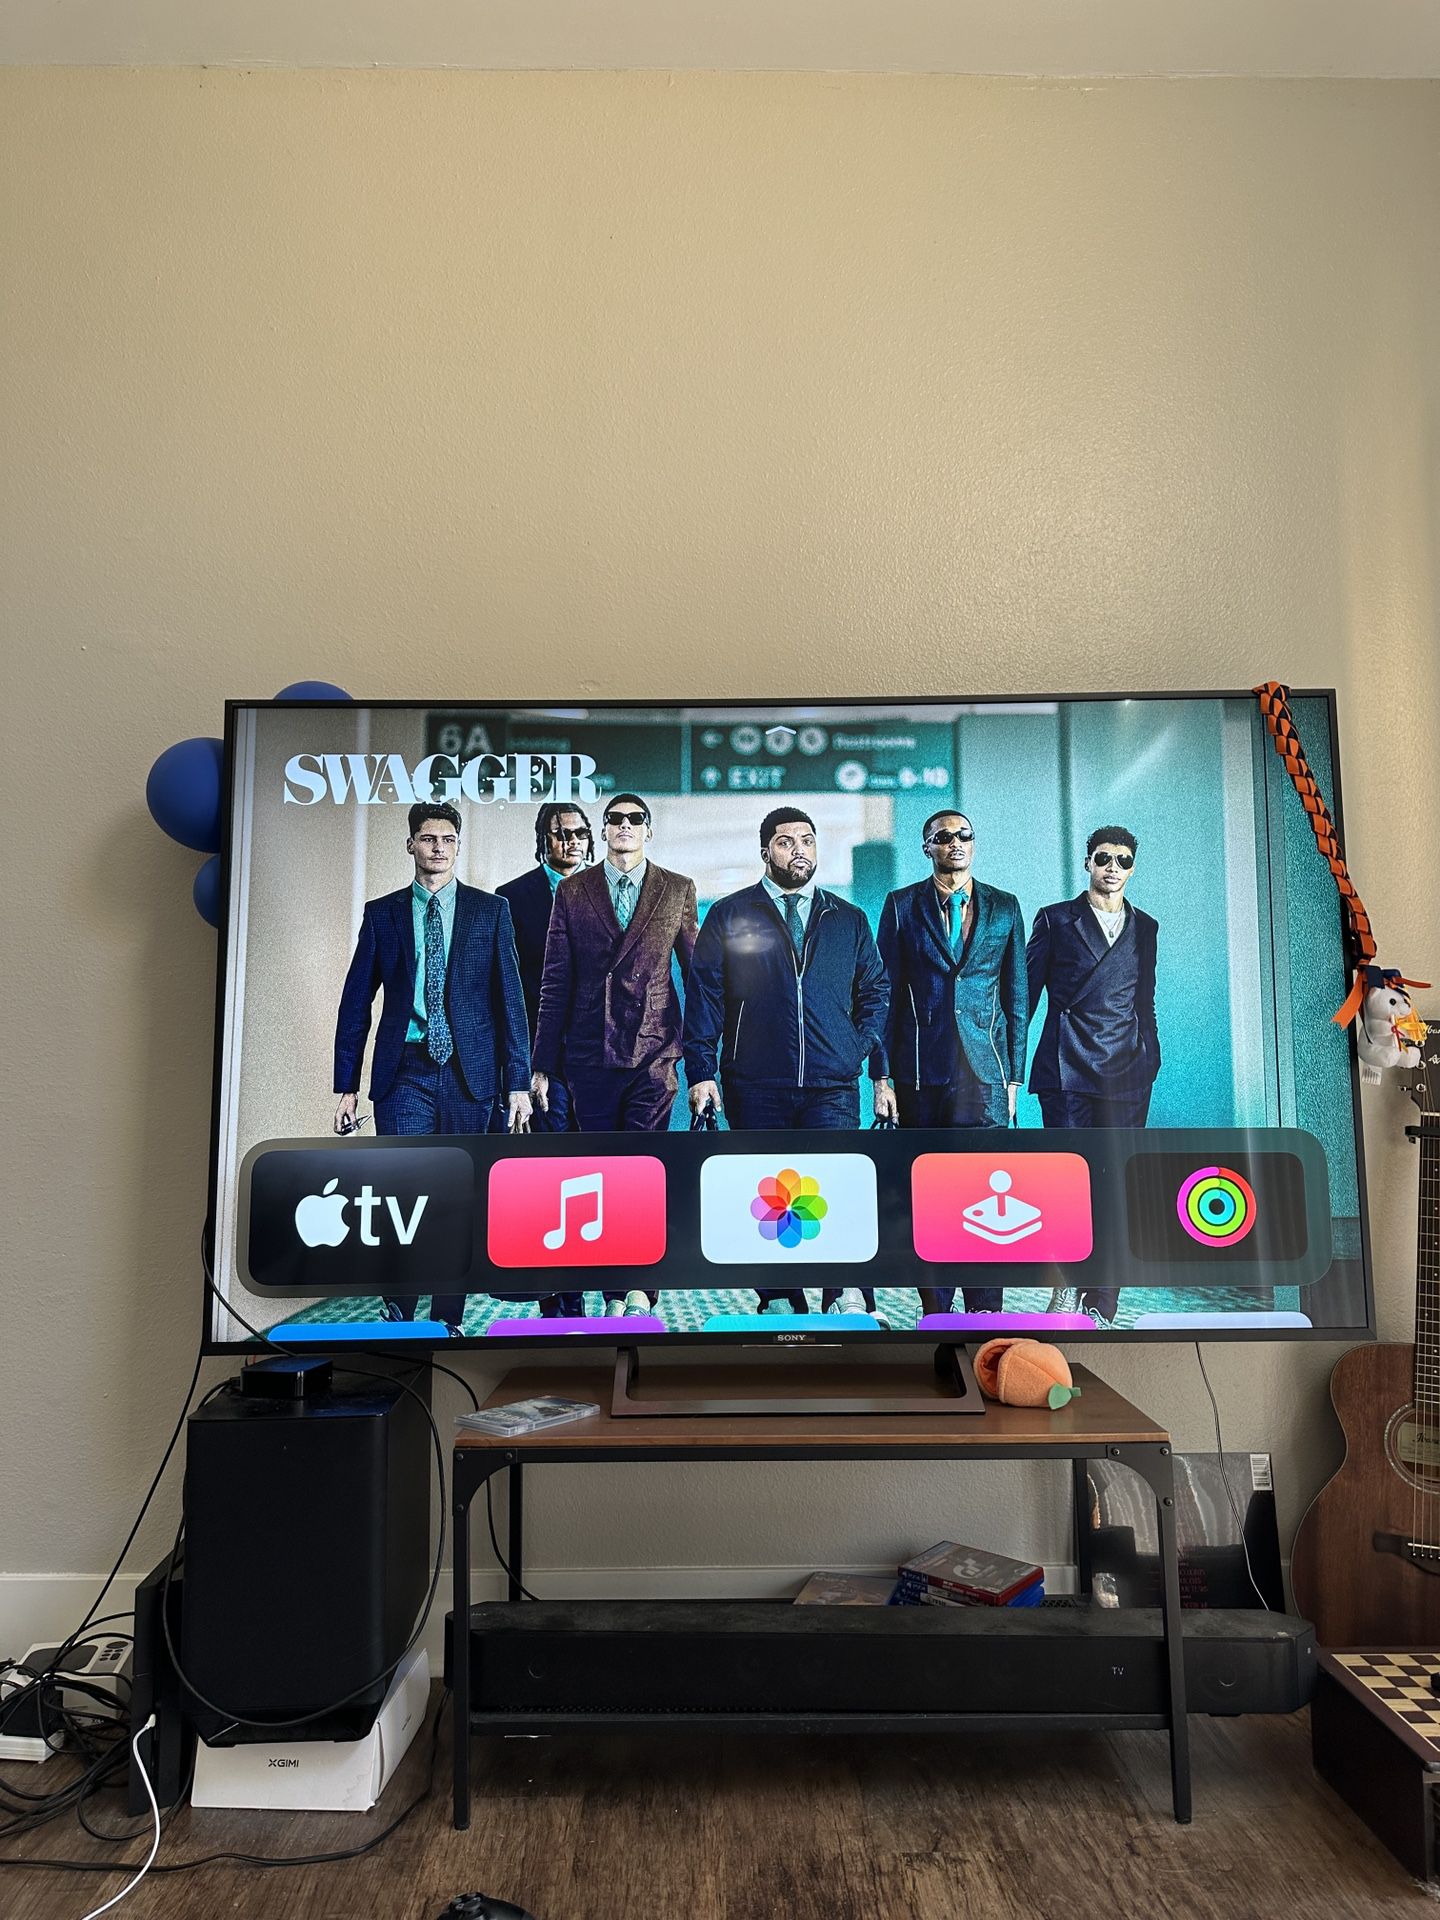 75” Sony TV + table+apple tv